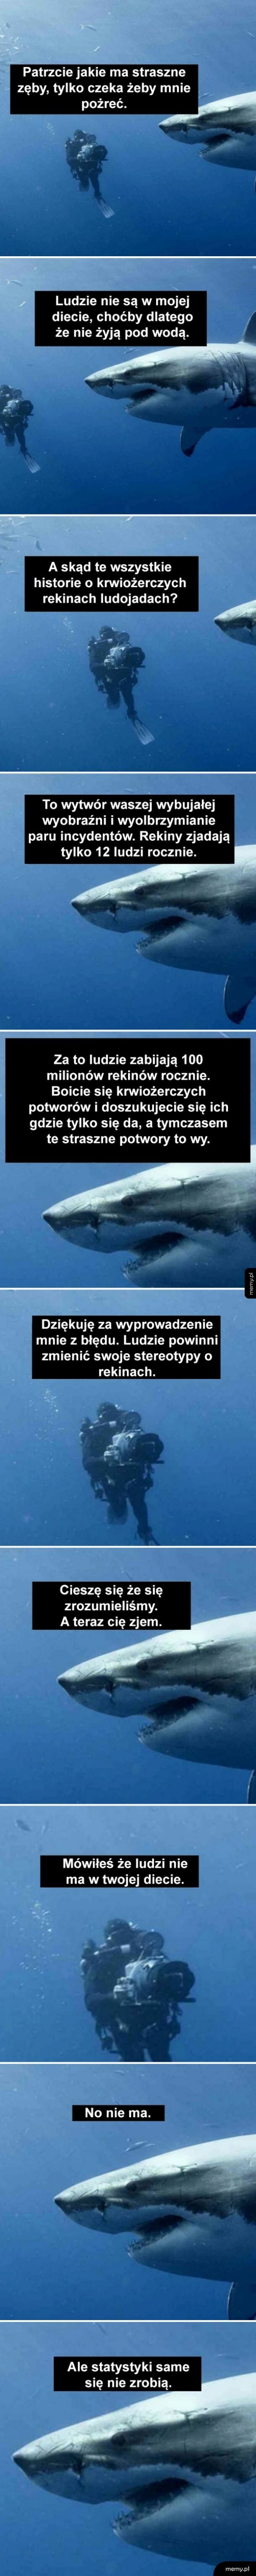 Prawda o rekinach